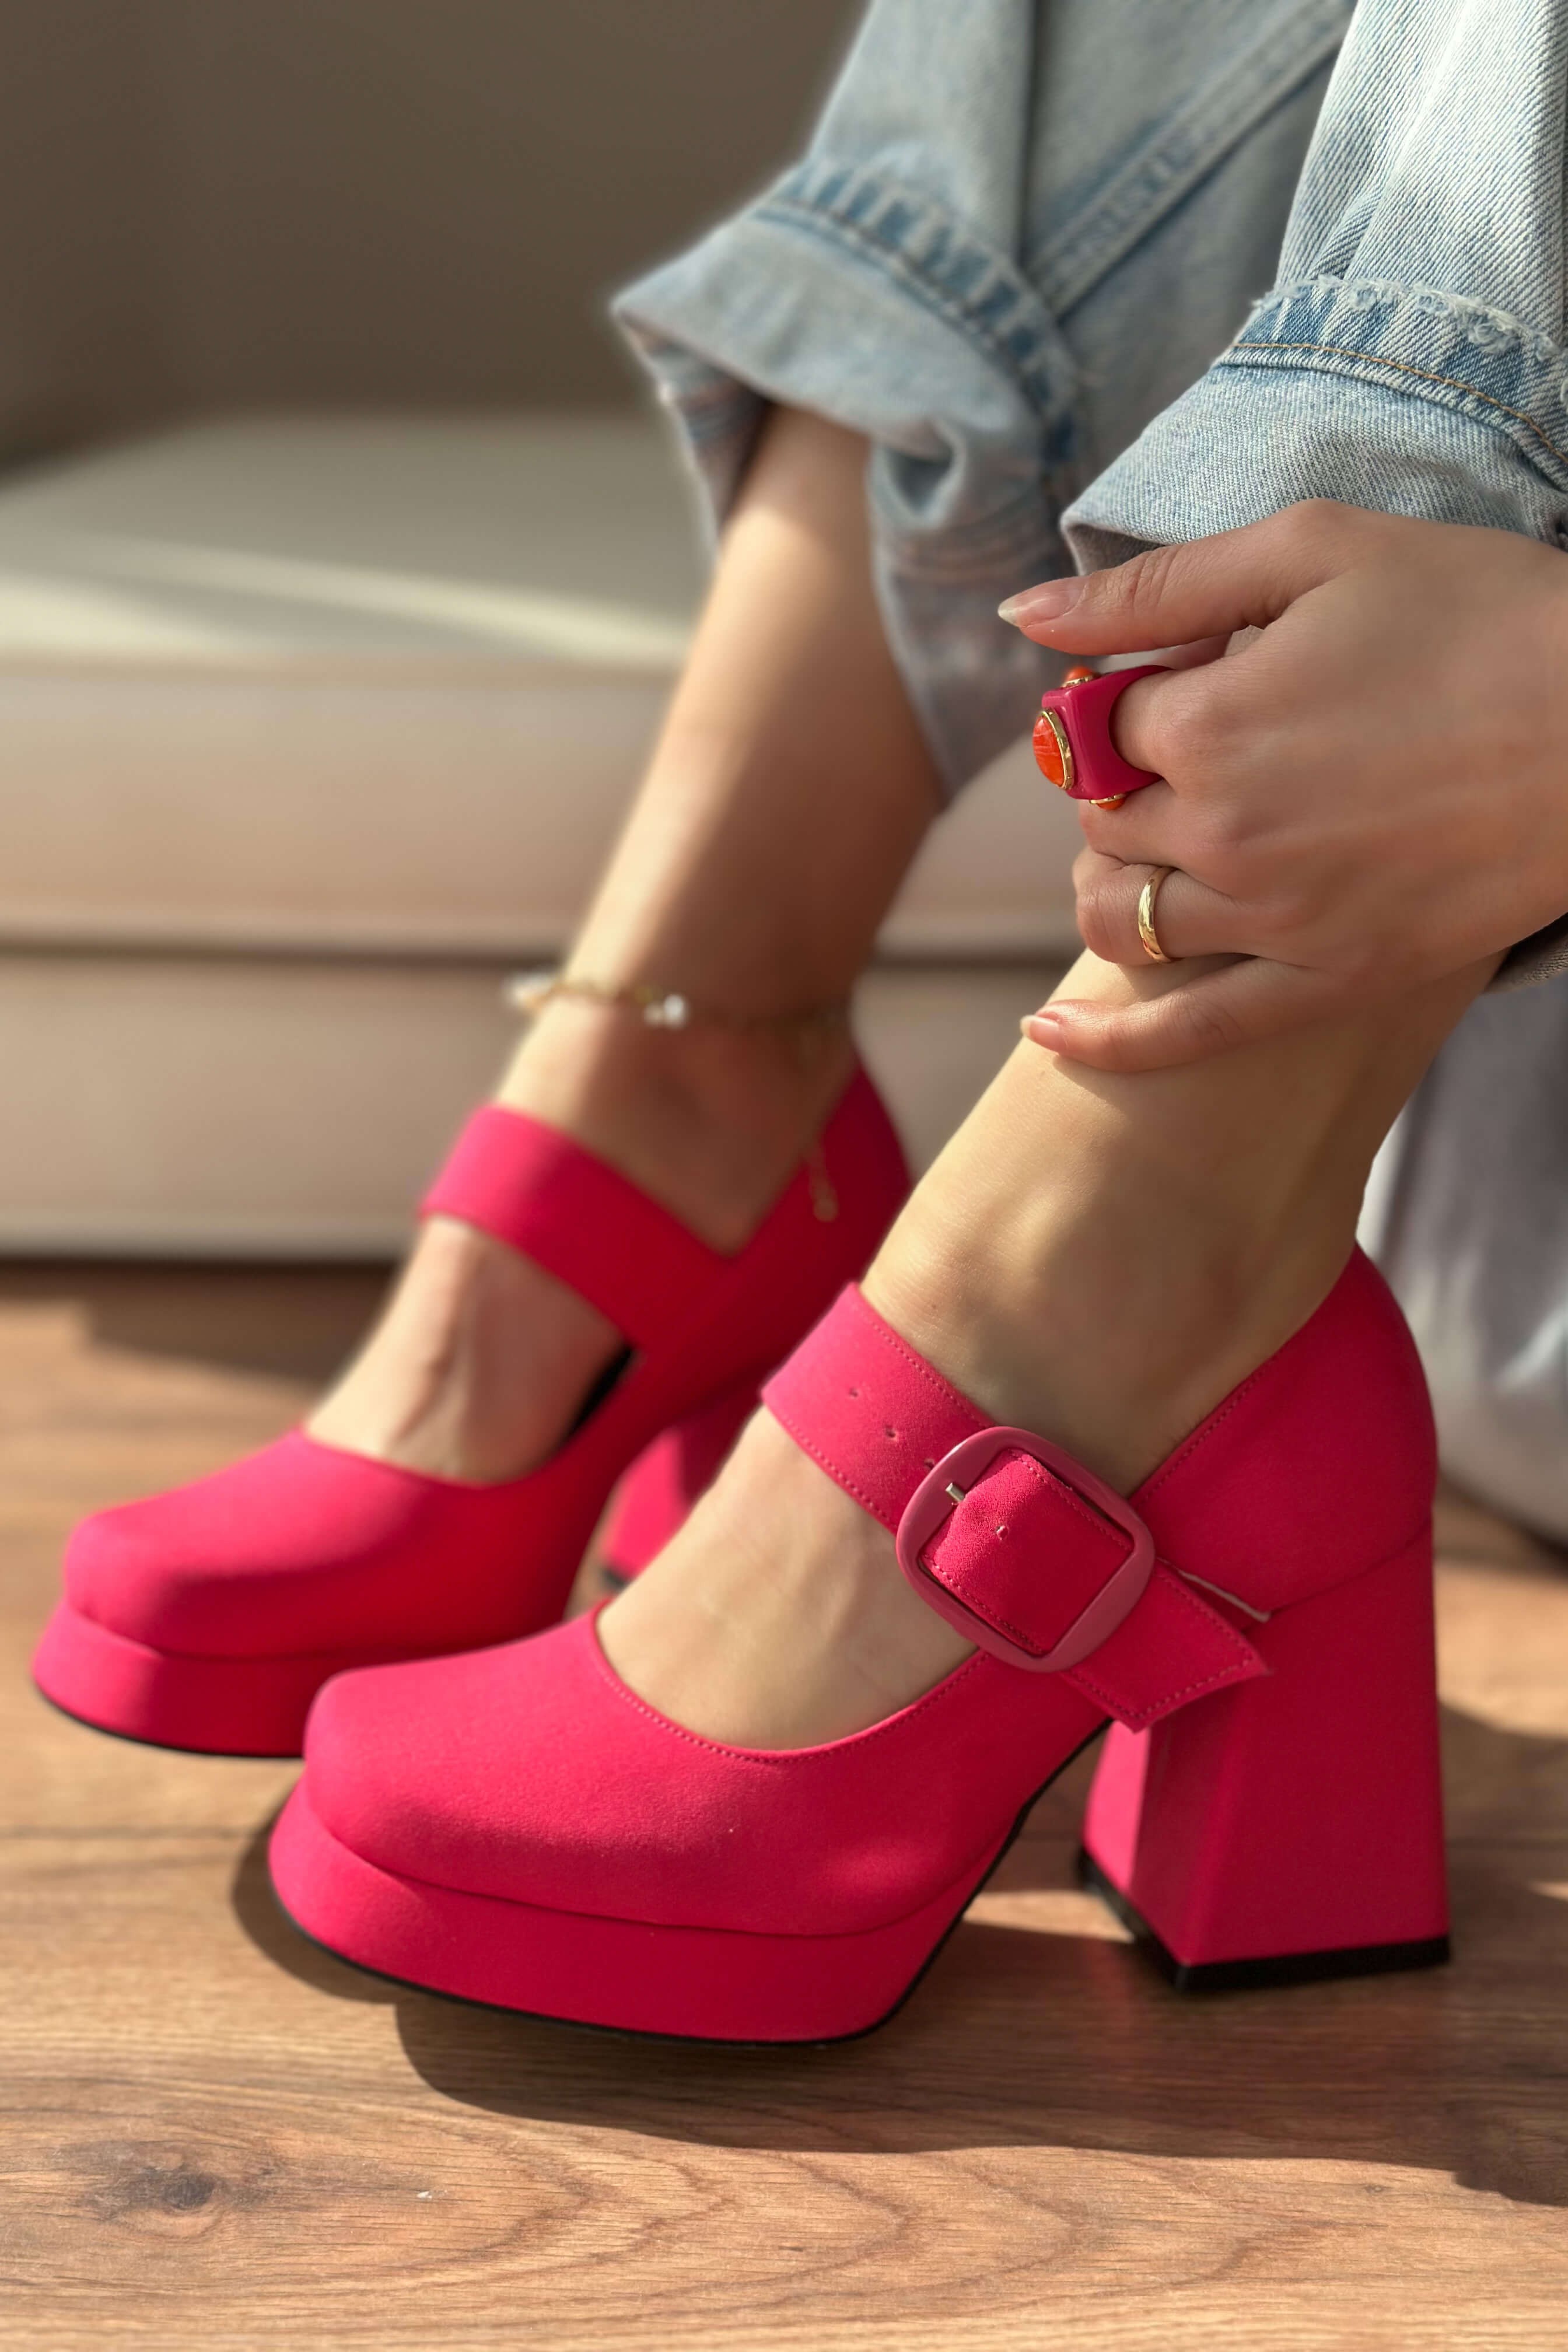 Alpons Satin Woman Platform Heels Shoe Fuchsia Pink